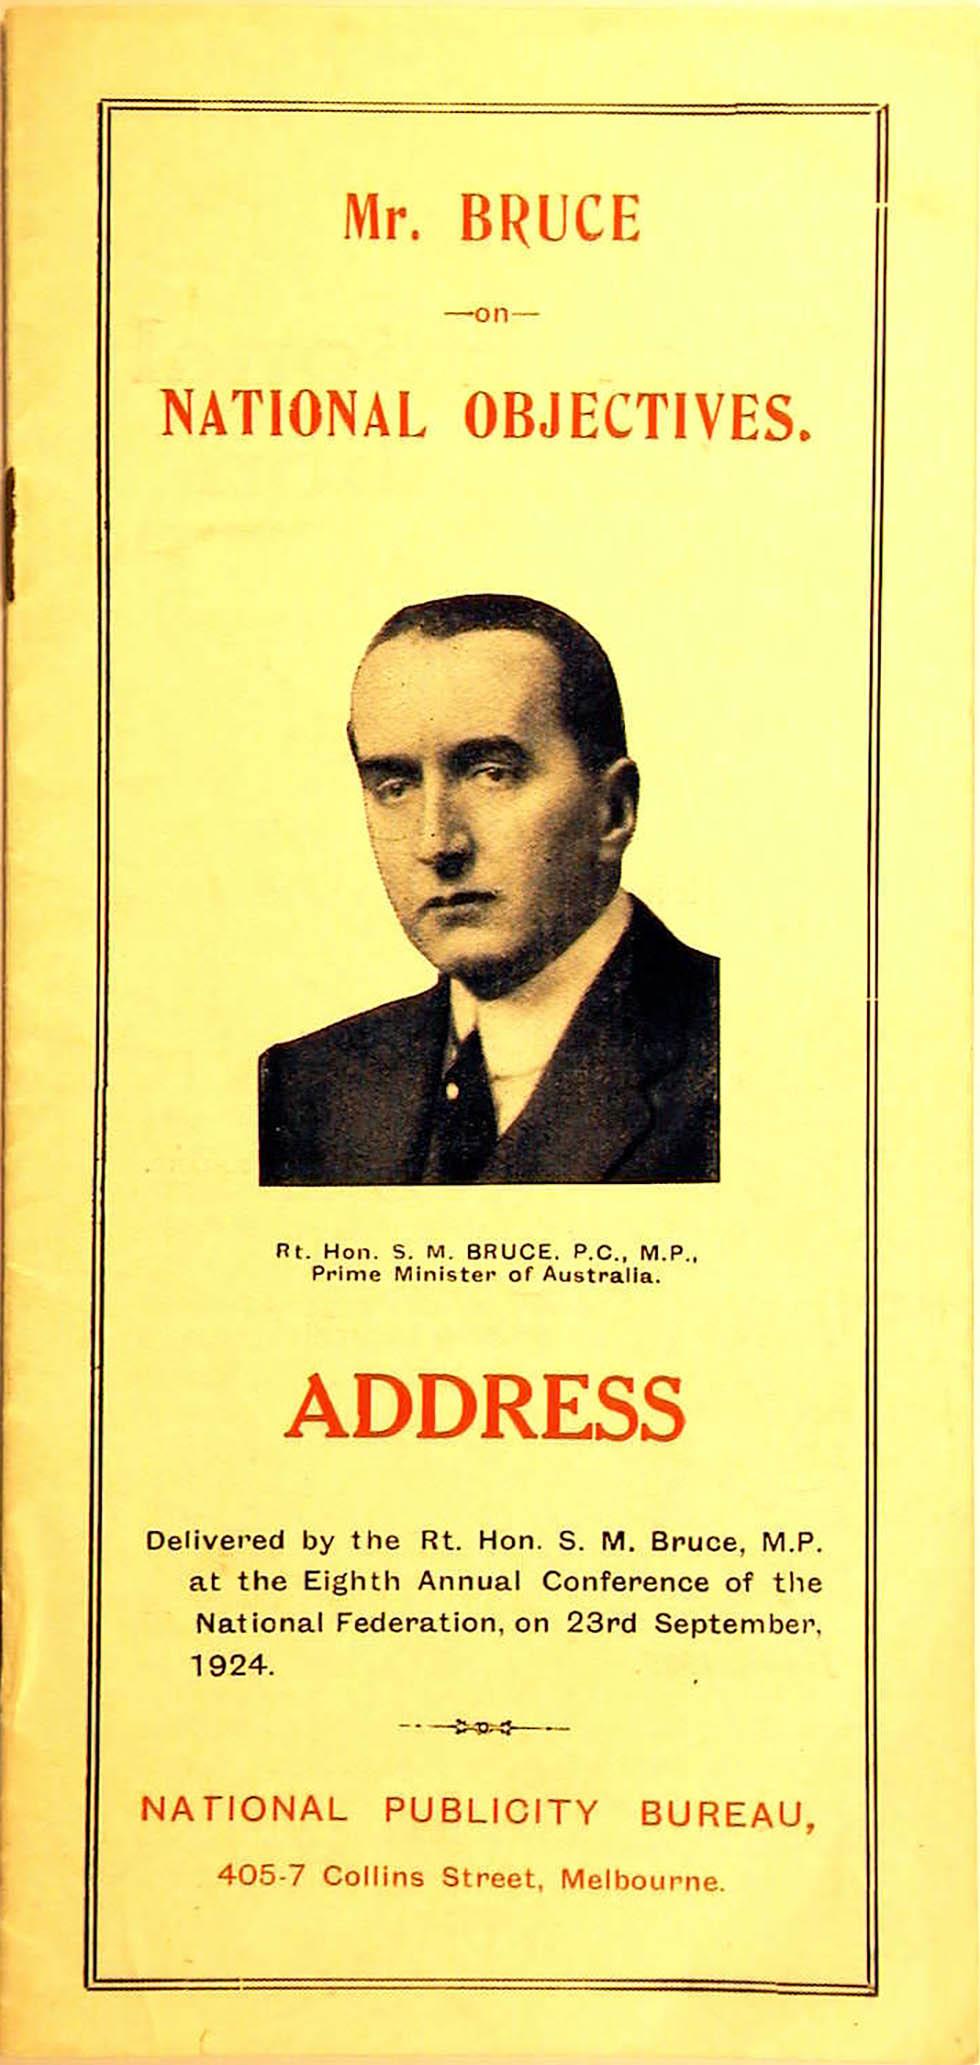 Bruce's ‘National Objectives’ speech, delivered on 23 September 1924, was printed for distribution.